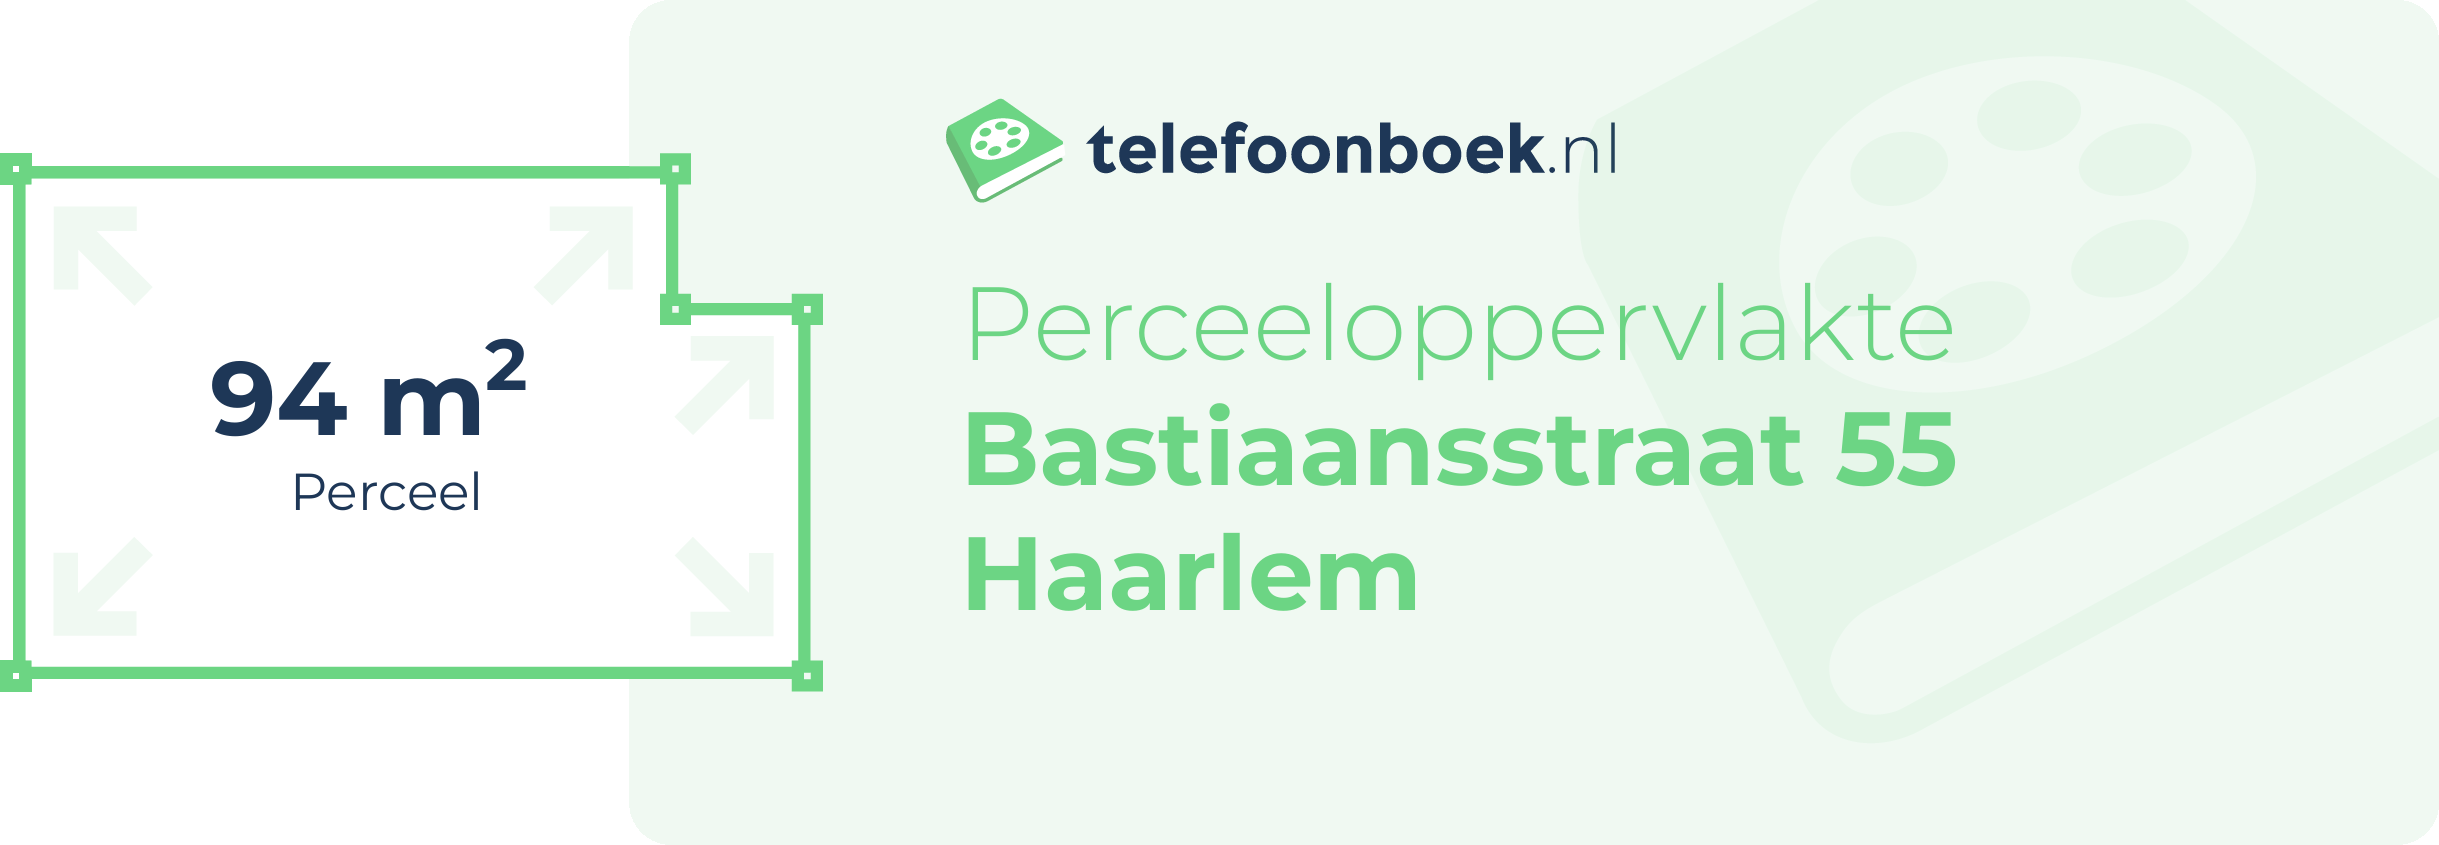 Perceeloppervlakte Bastiaansstraat 55 Haarlem